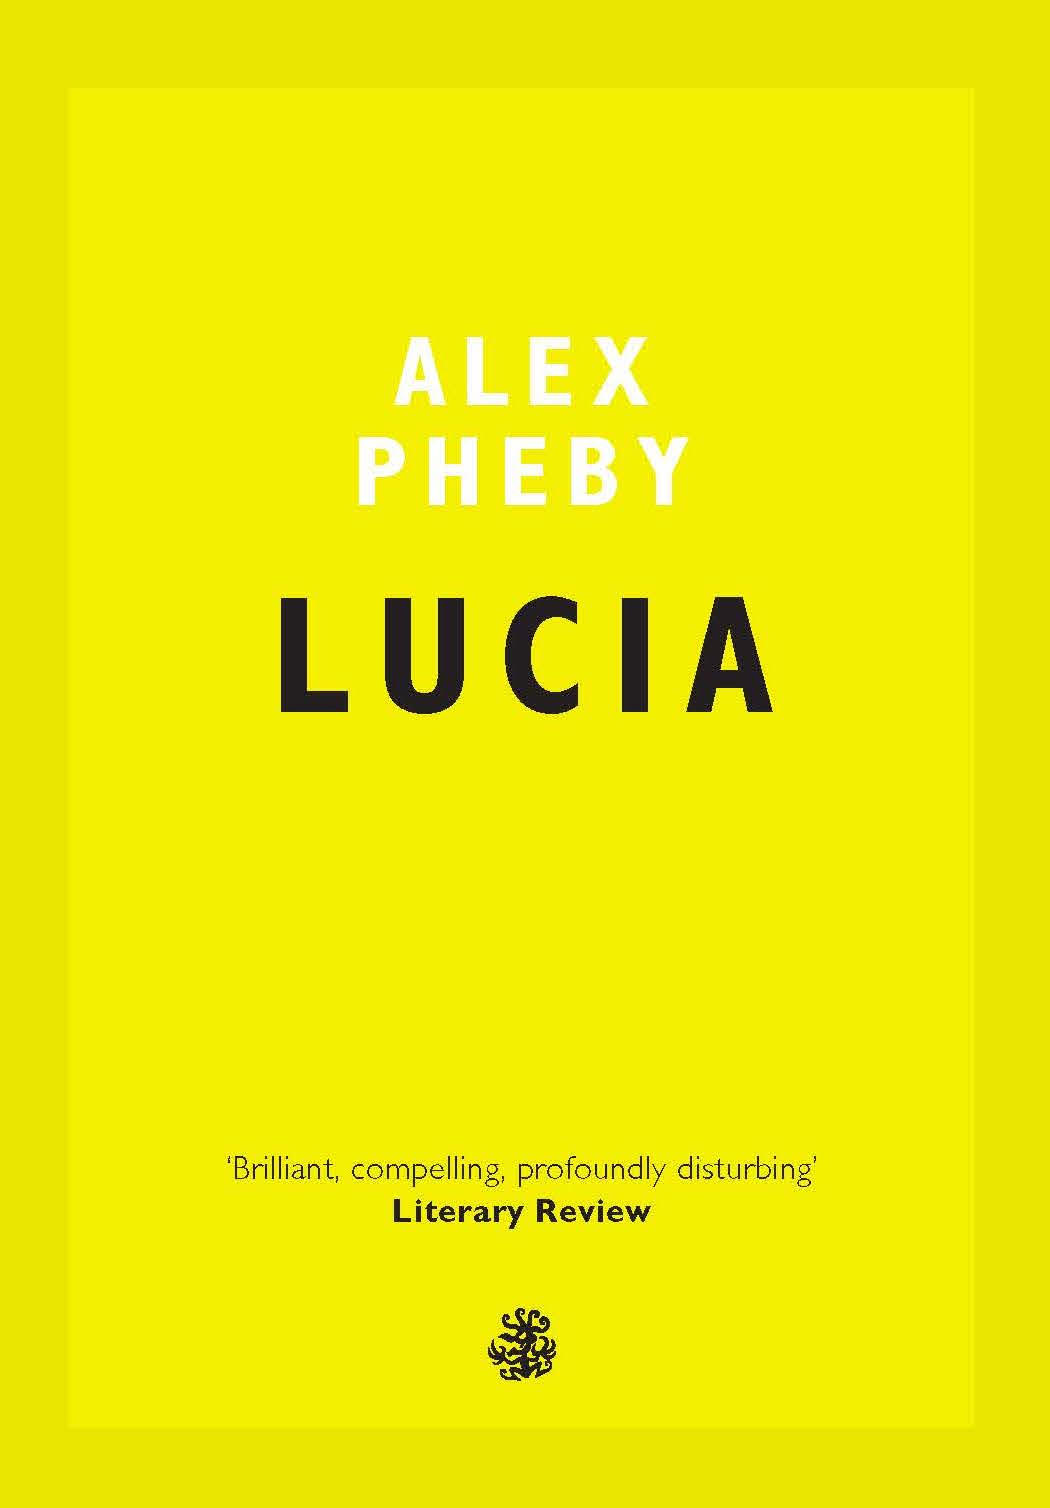 Lucia by Alex Pheby (Galley Beggar Press)